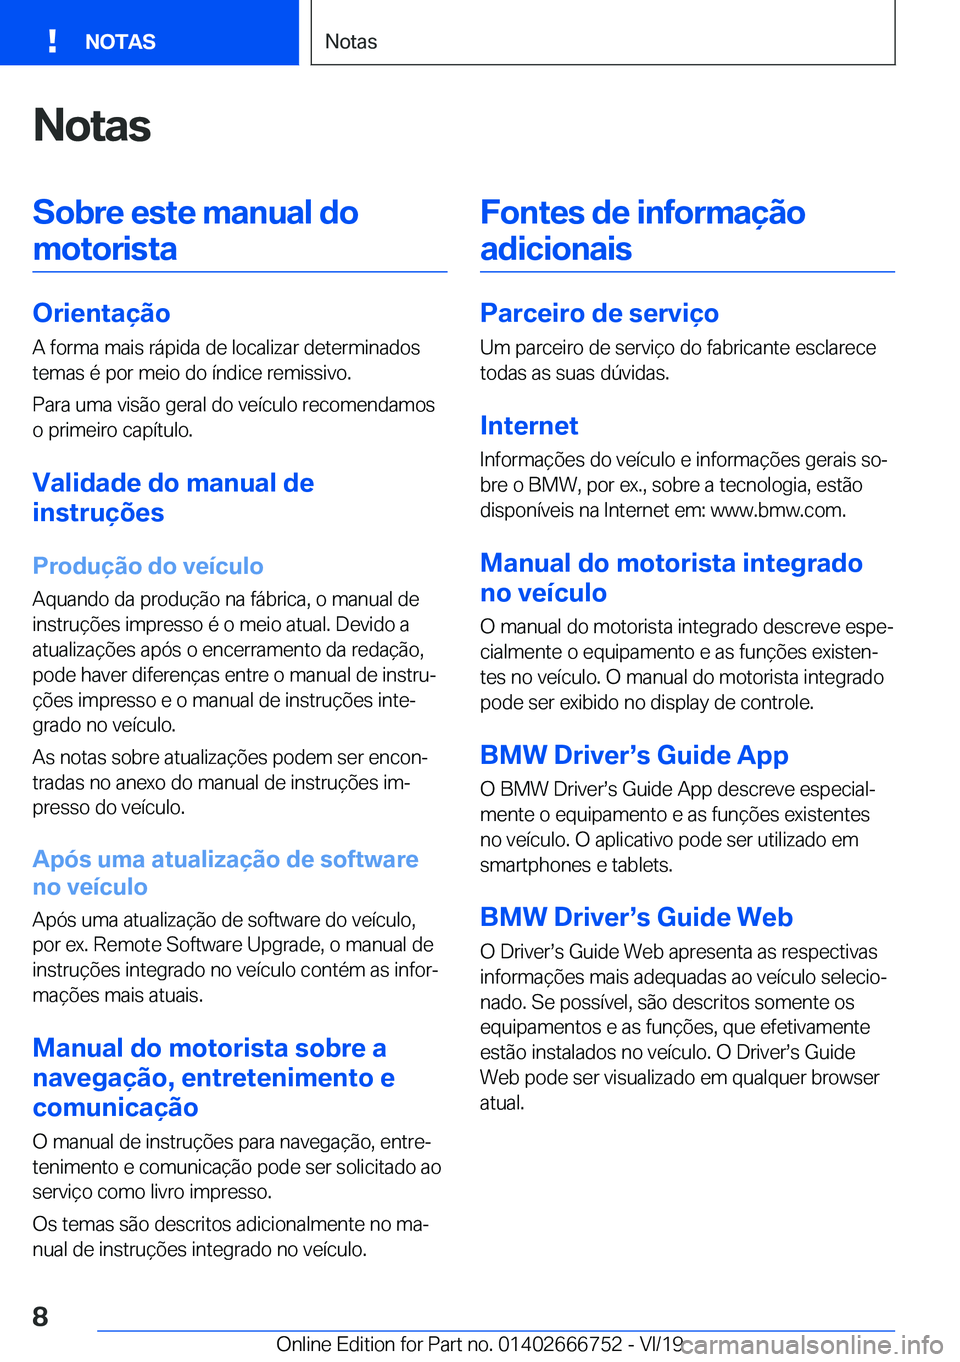 BMW M5 2020  Manual do condutor (in Portuguese) �N�o�t�a�s�S�o�b�r�e��e�s�t�e��m�a�n�u�a�l��d�o�m�o�t�o�r�i�s�t�a
�O�r�i�e�n�t�a�